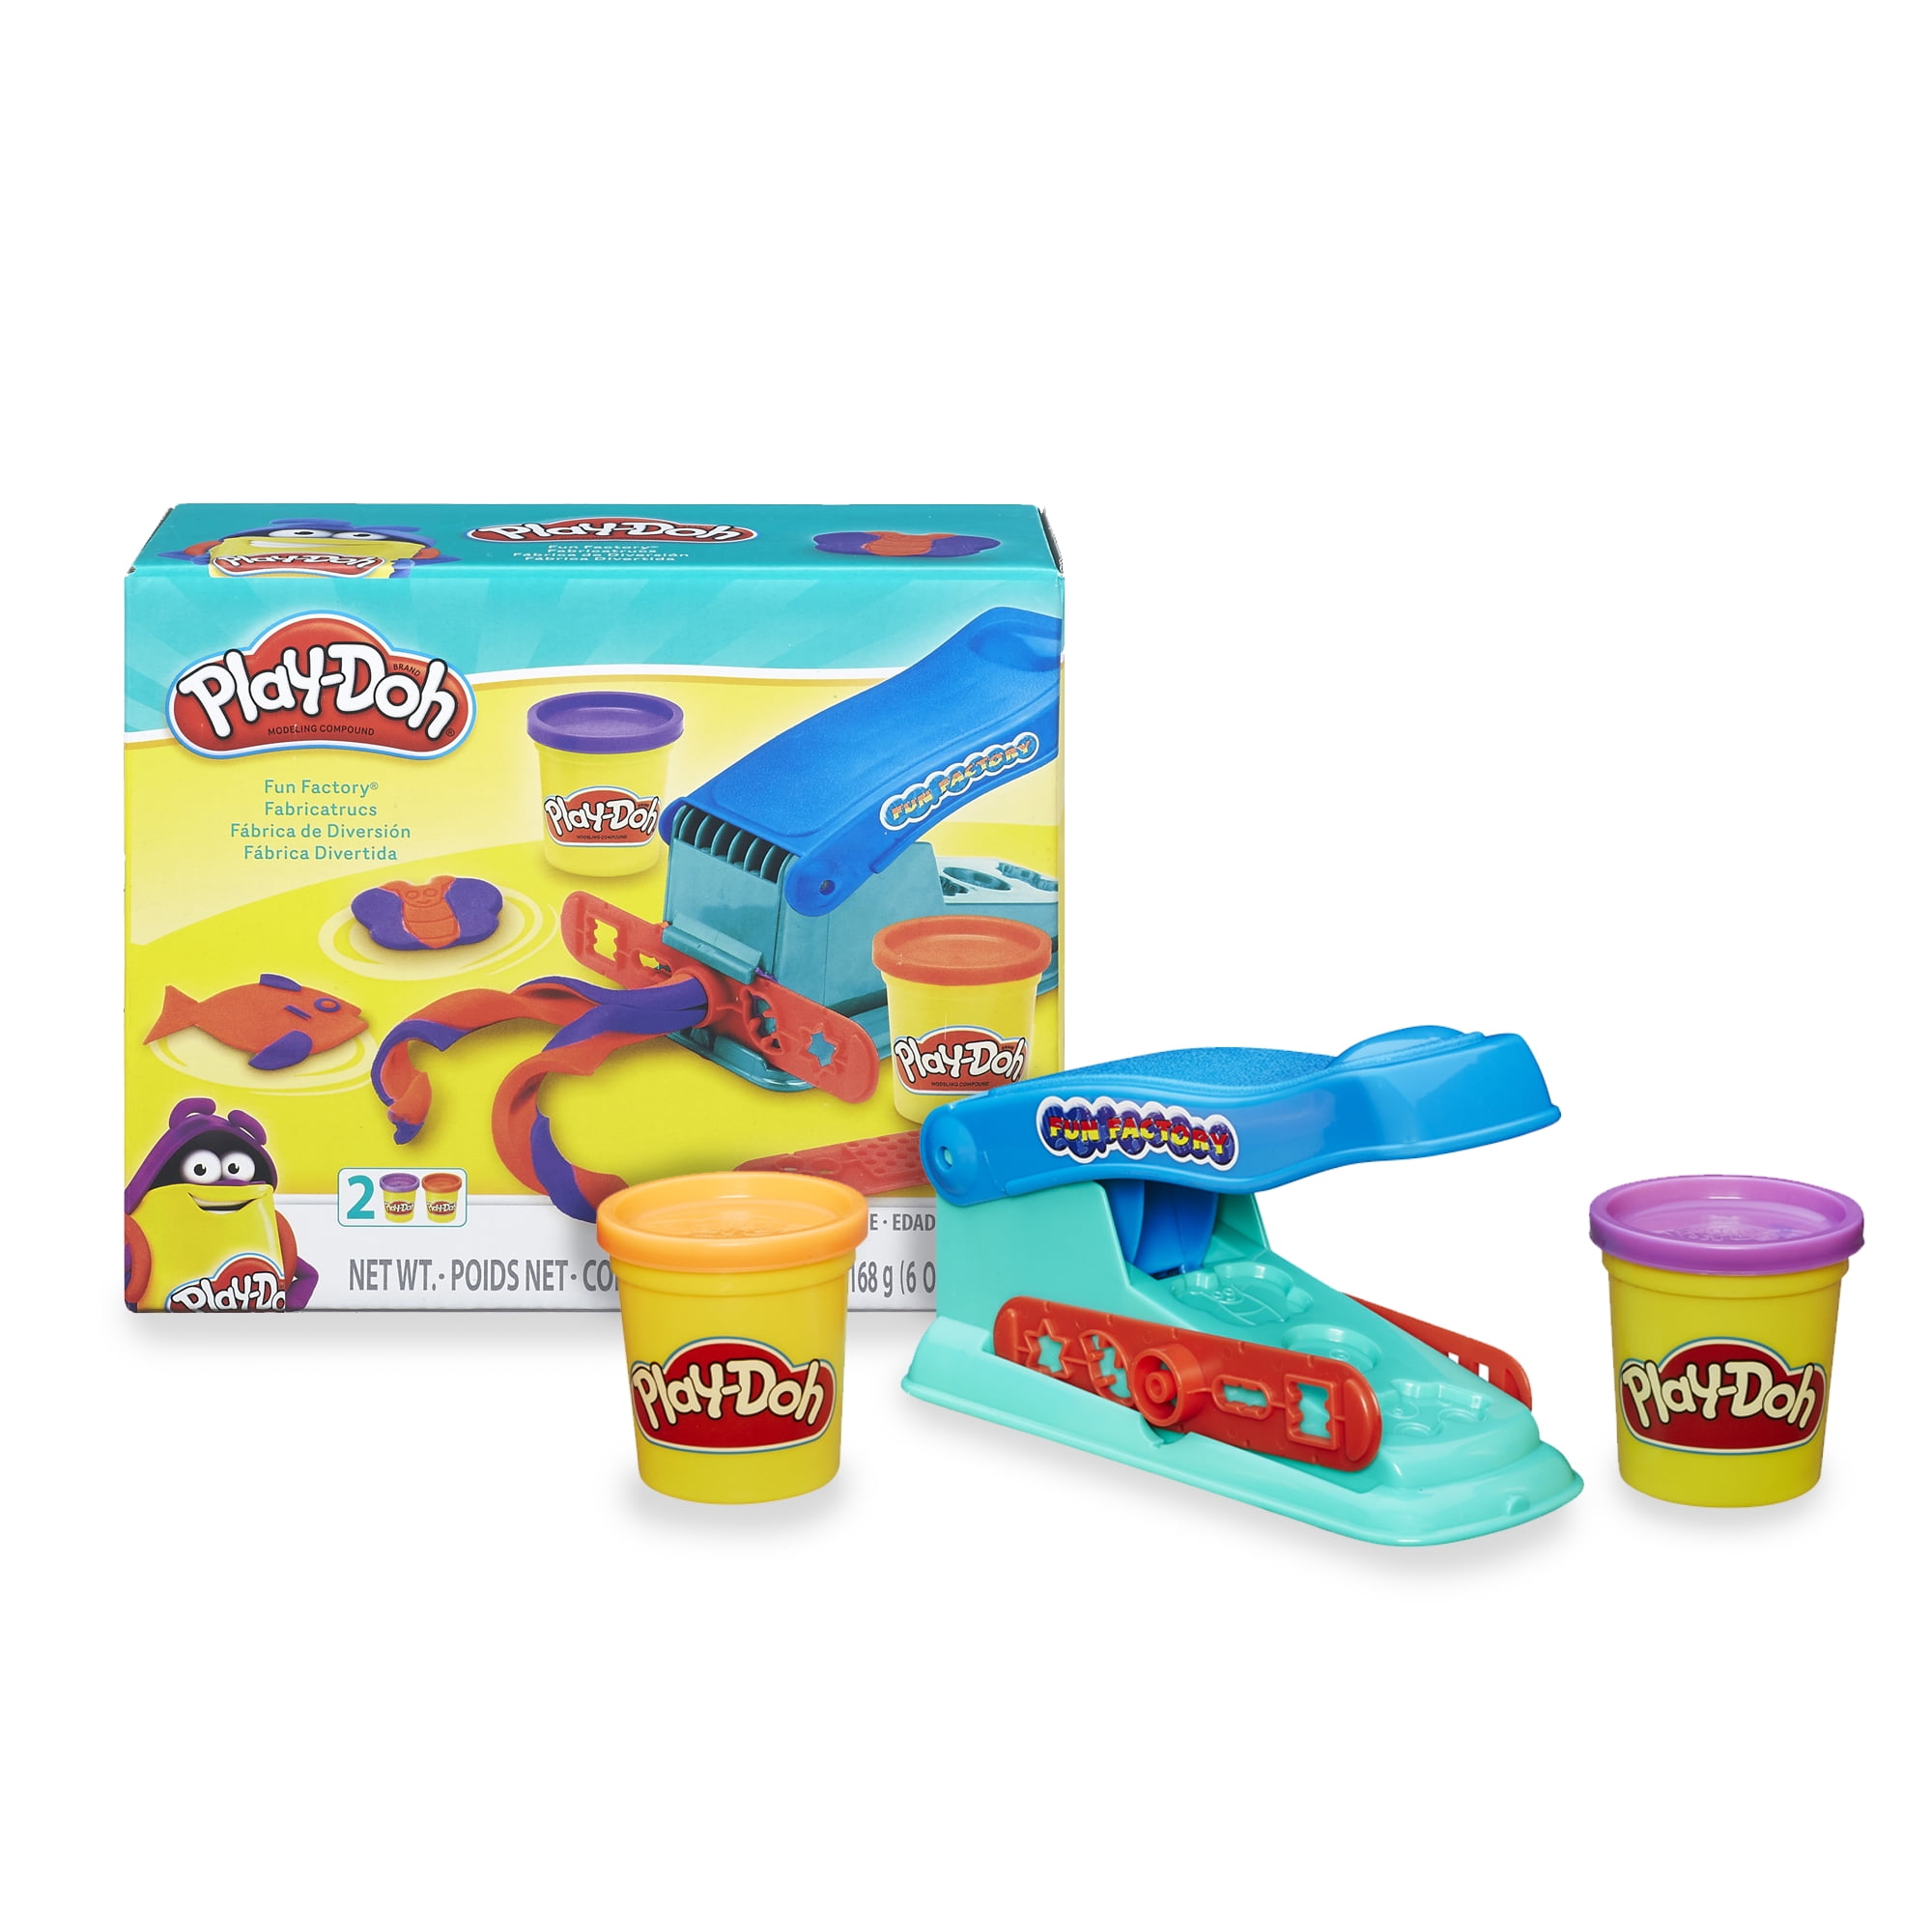 Play-Doh Classic Fun Factory Playset 